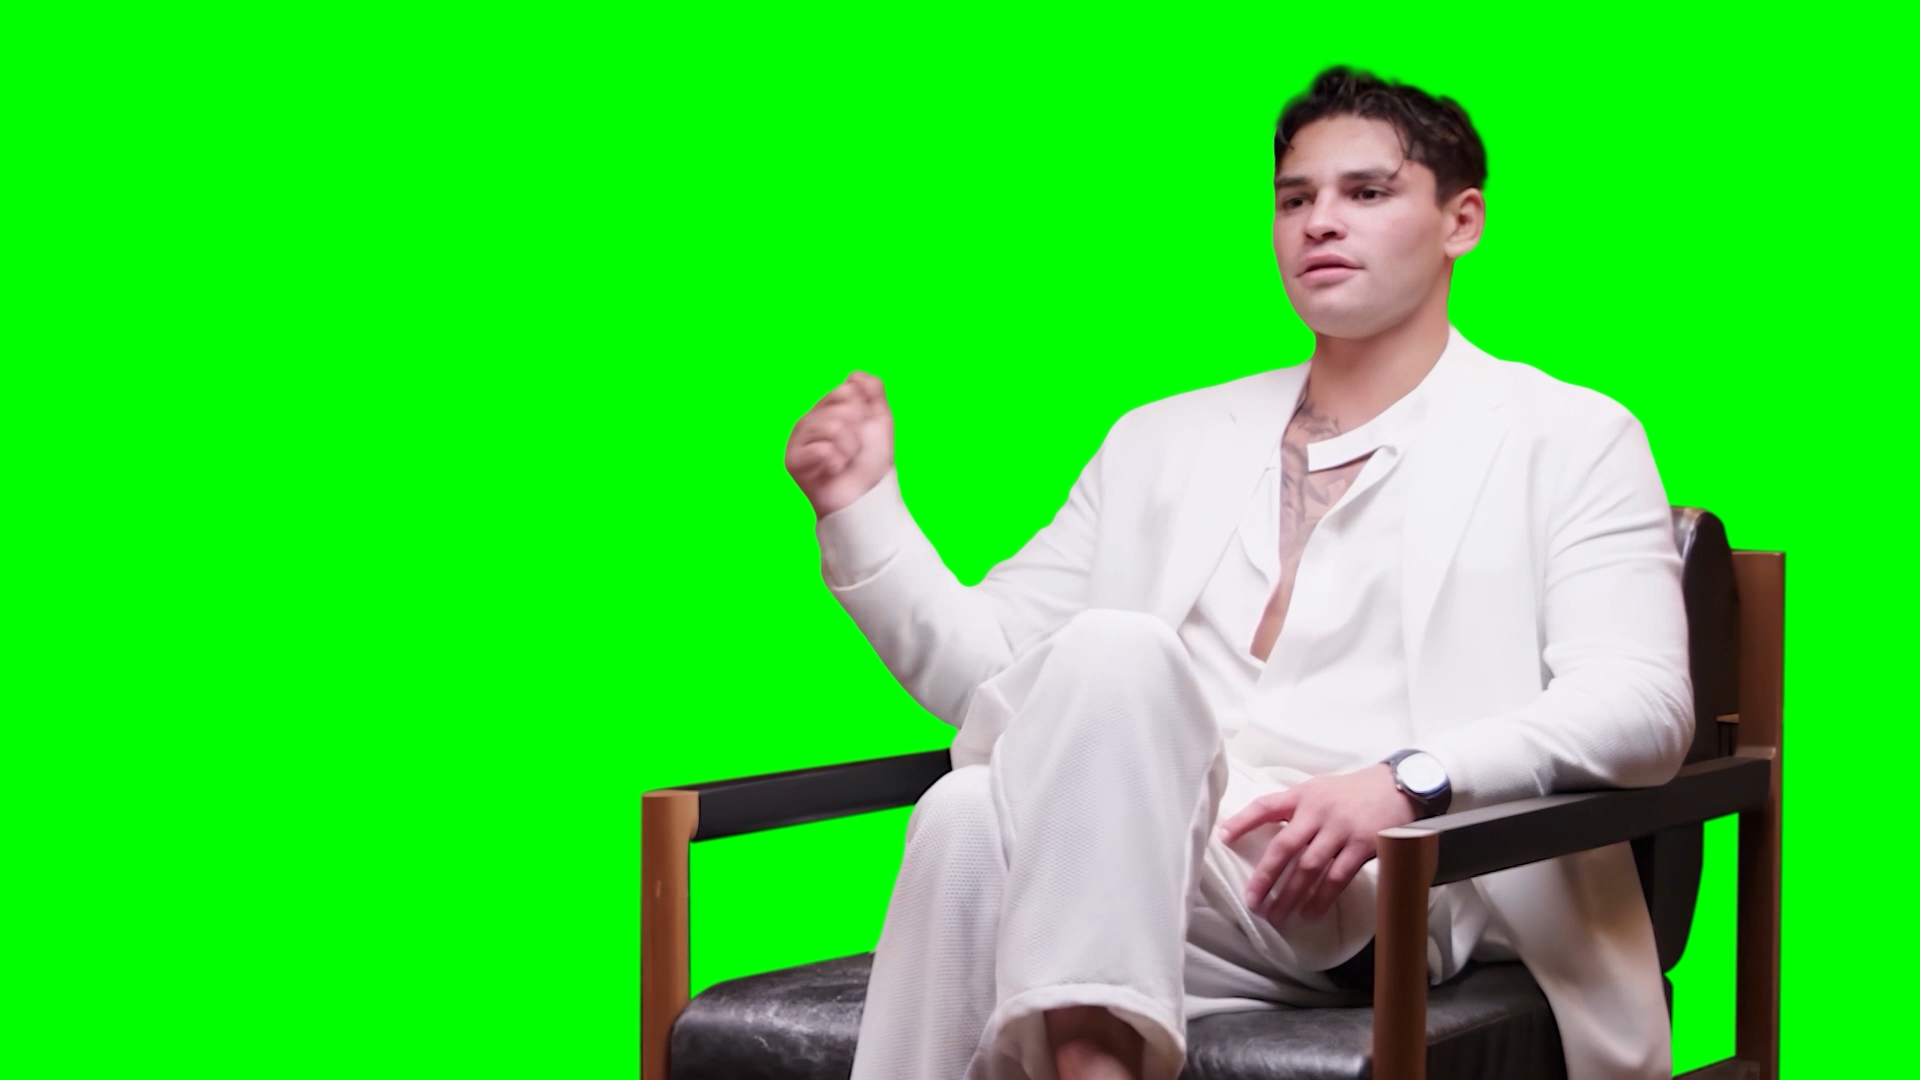 Ryan Garcia singing during GQ interview meme - Ryan Garcia vs Devin Haney (Green Screen)